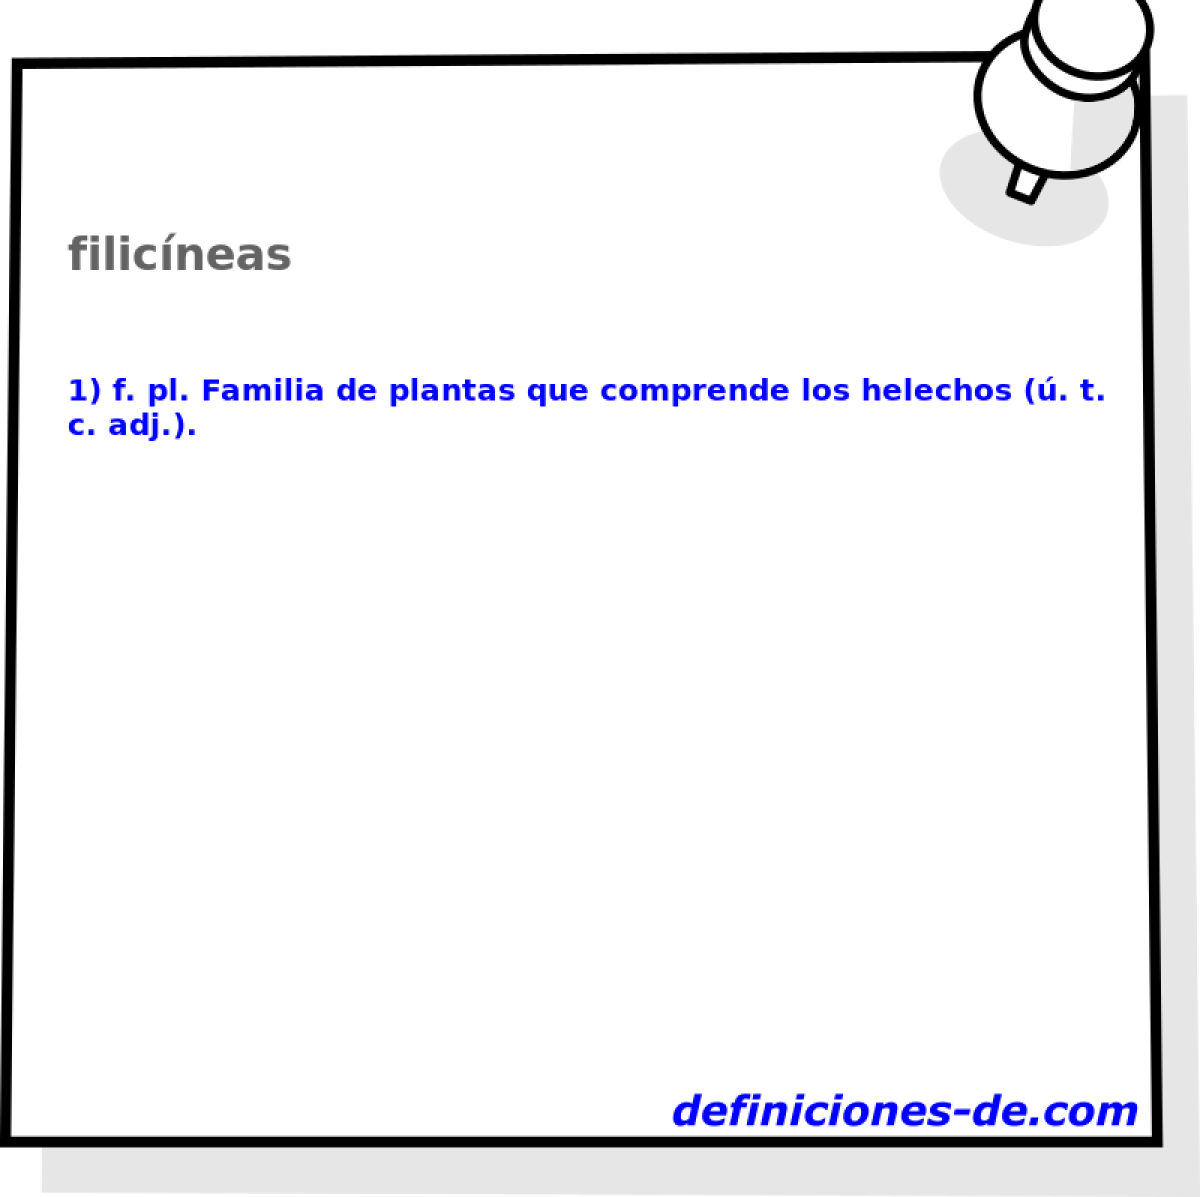 filicneas 